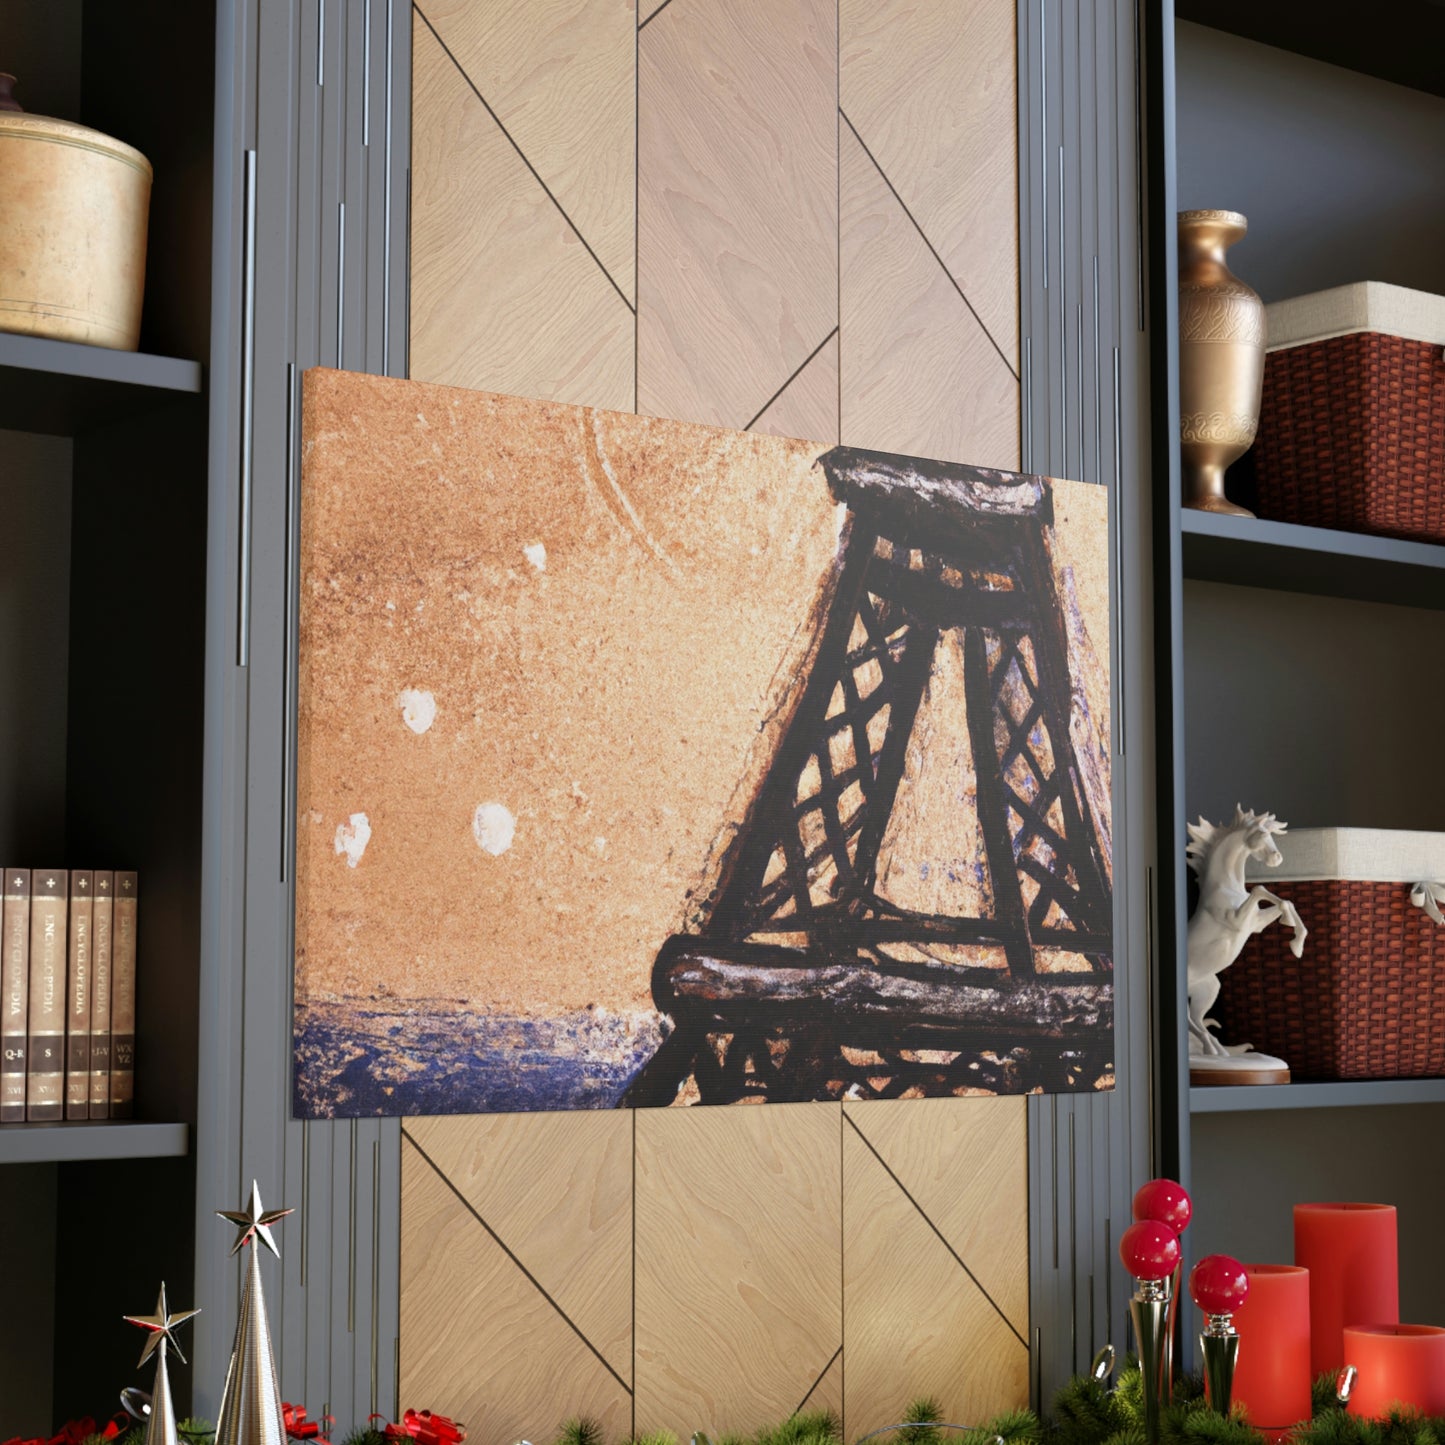 Jacques Le Grande - Eiffel Tower Canvas Wall Art